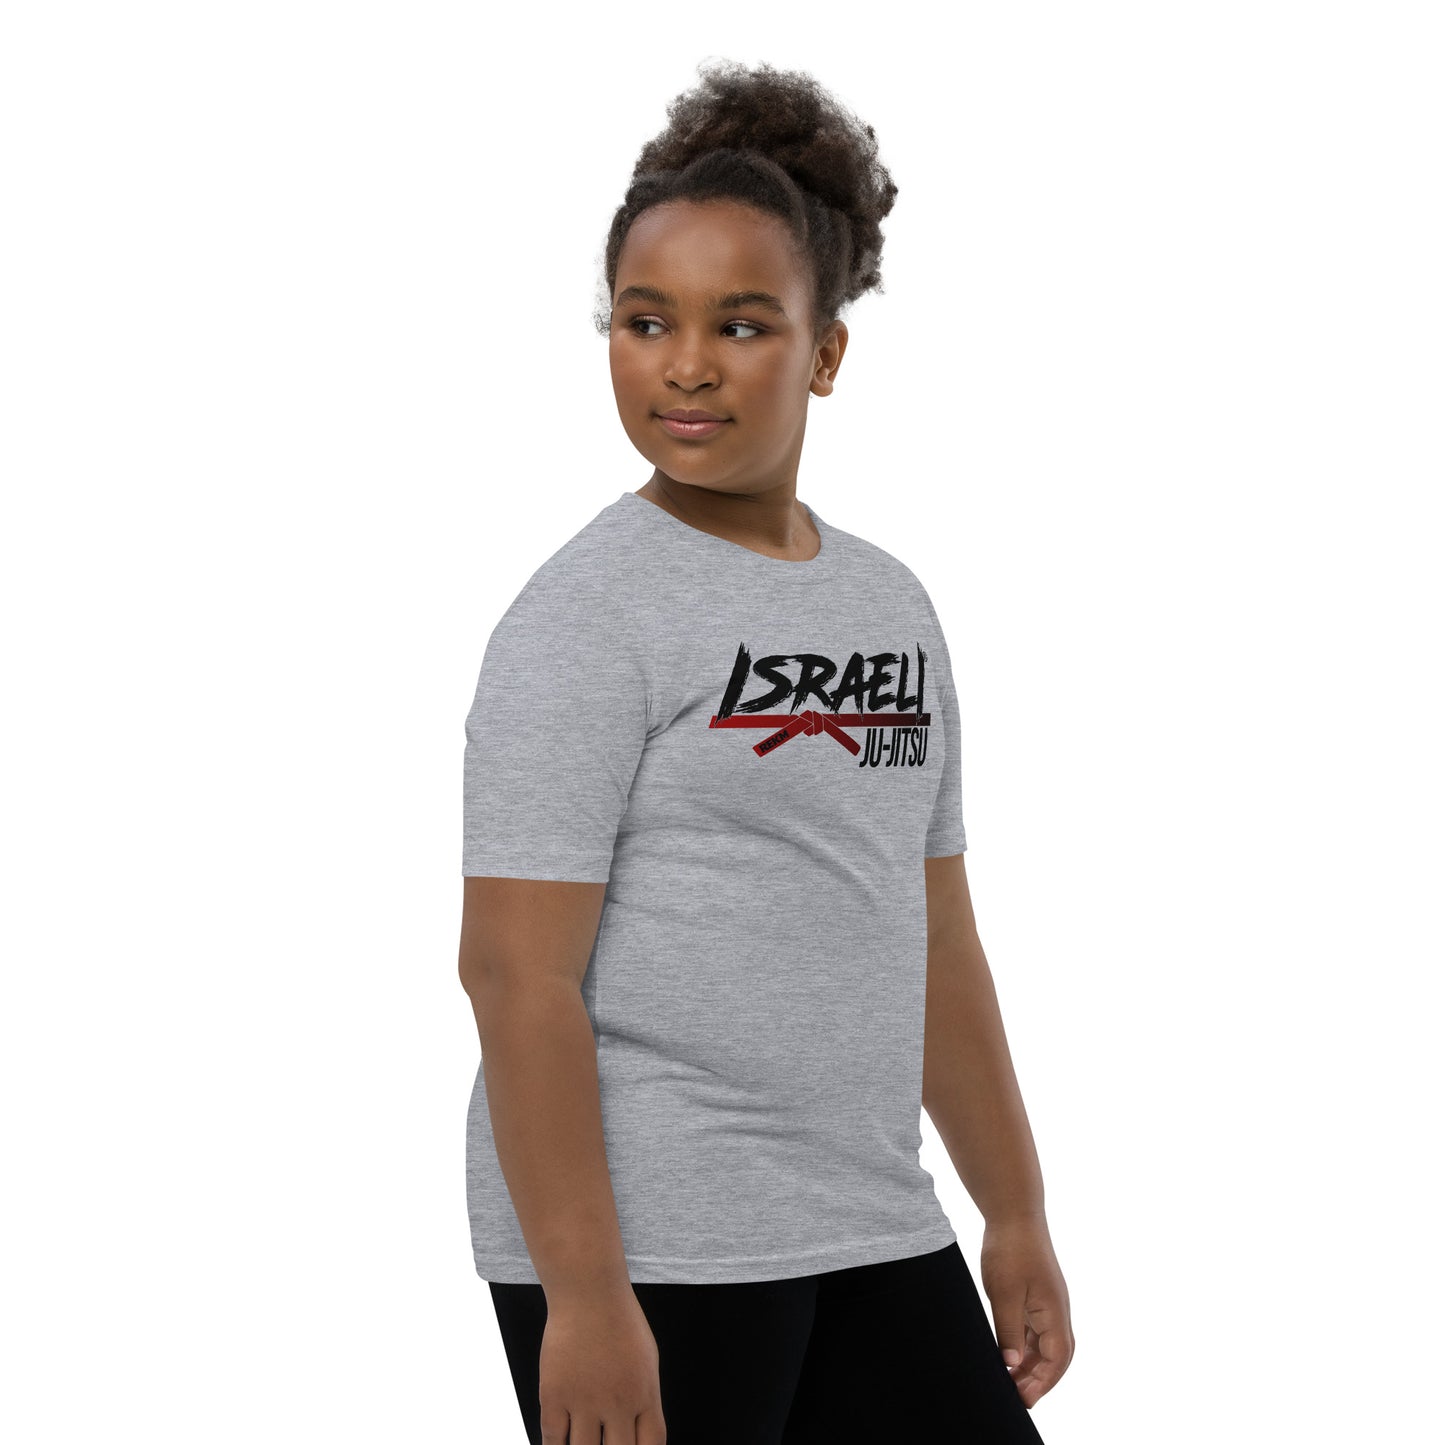 Unisex Israeli Ju-Jitsu Youth T-Shirt